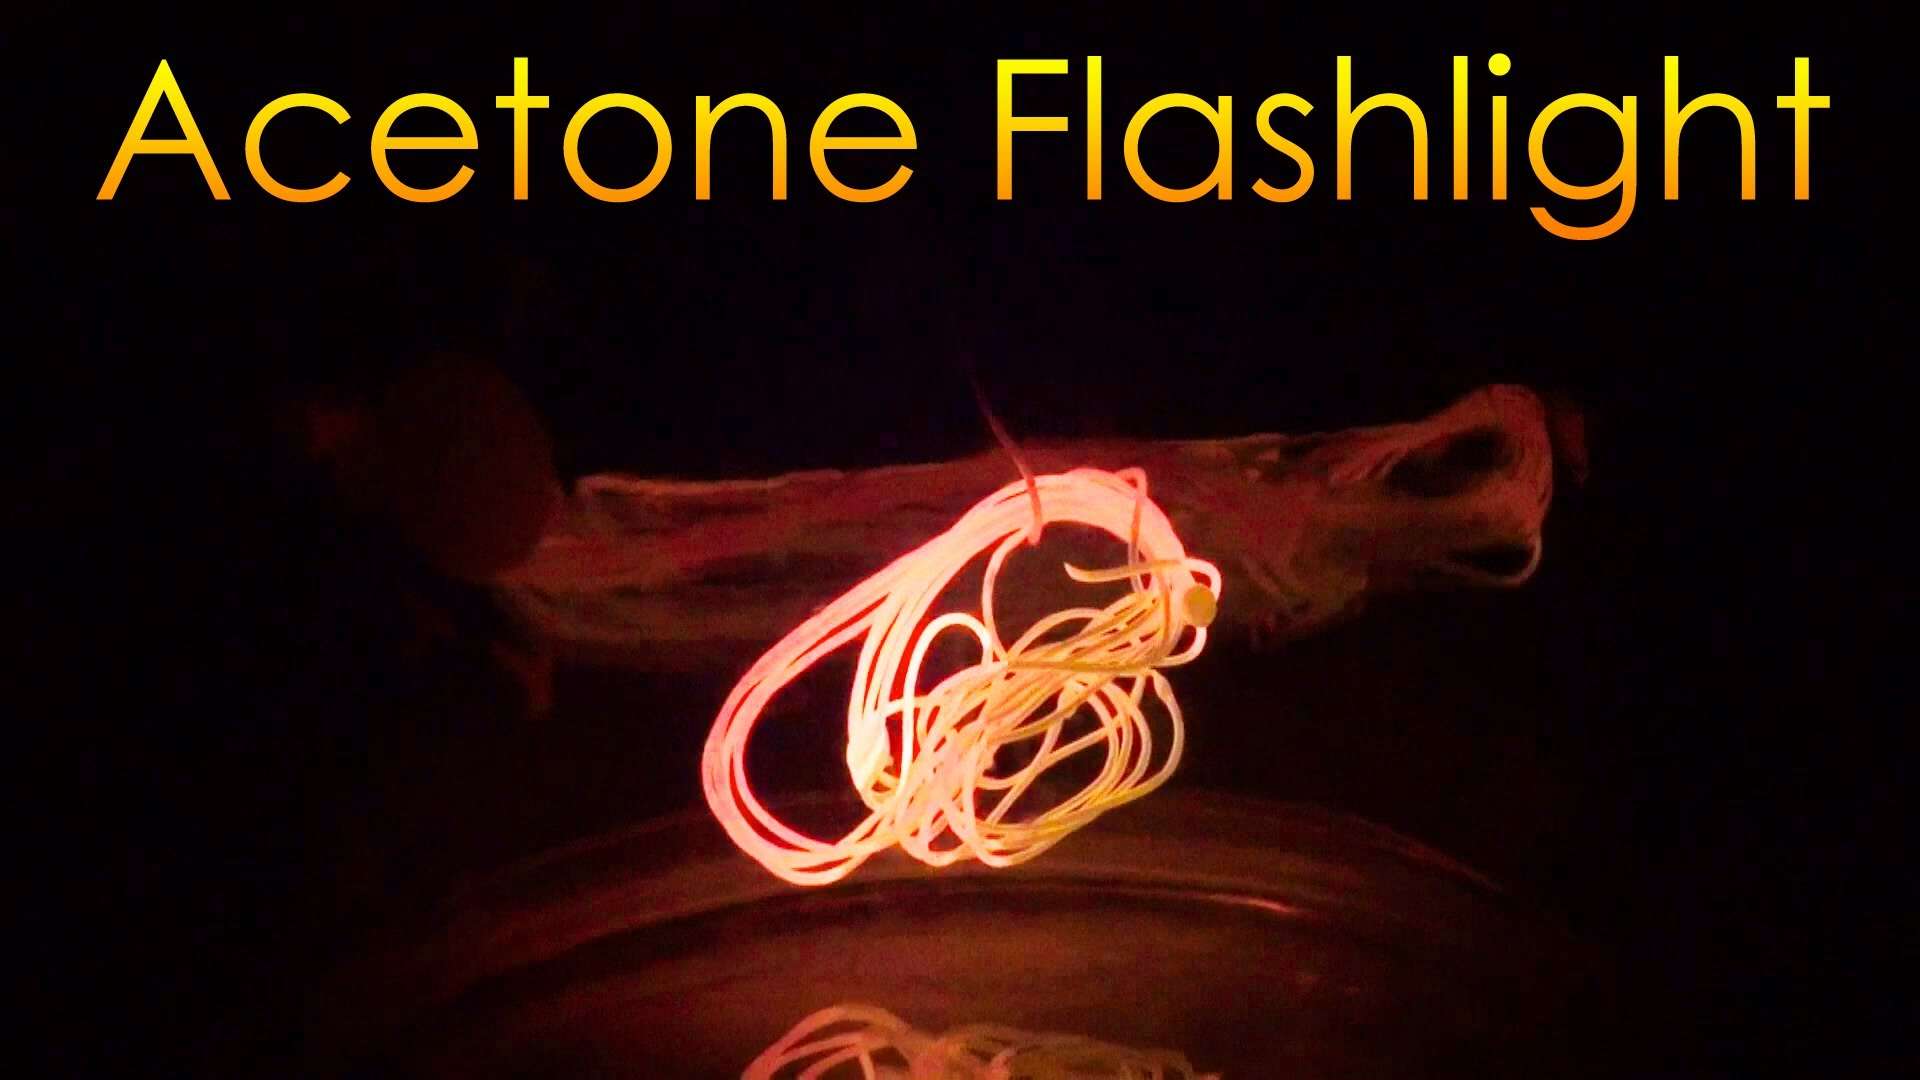 Acetone Flashlight - Reaction of Acetone Oxidation , Glowing wire!